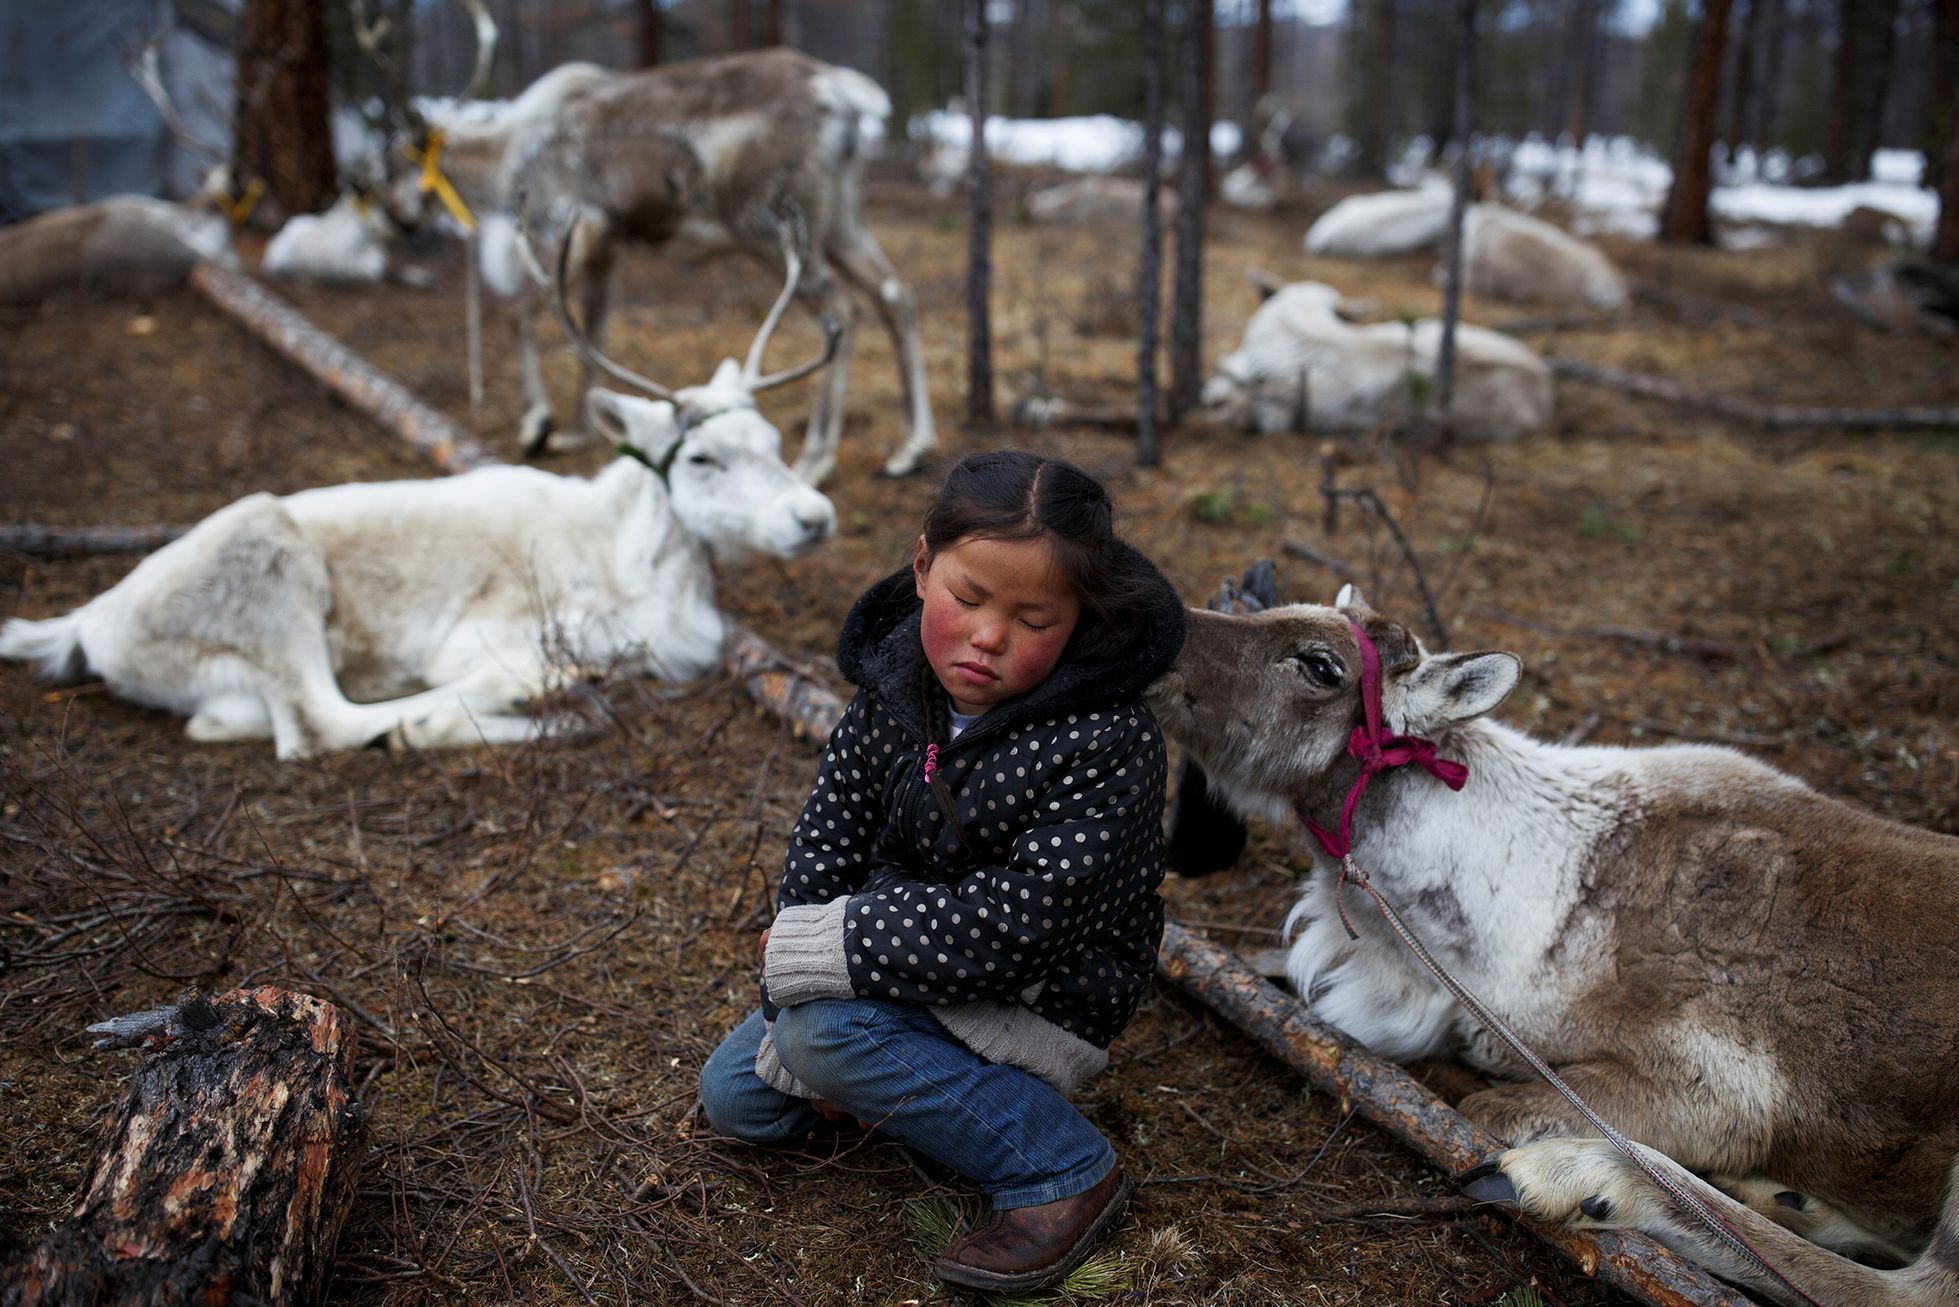 FOTOGALERIE / Život kočovných pastýřů v Mongolsku / Reuters / rok 2018 / 21